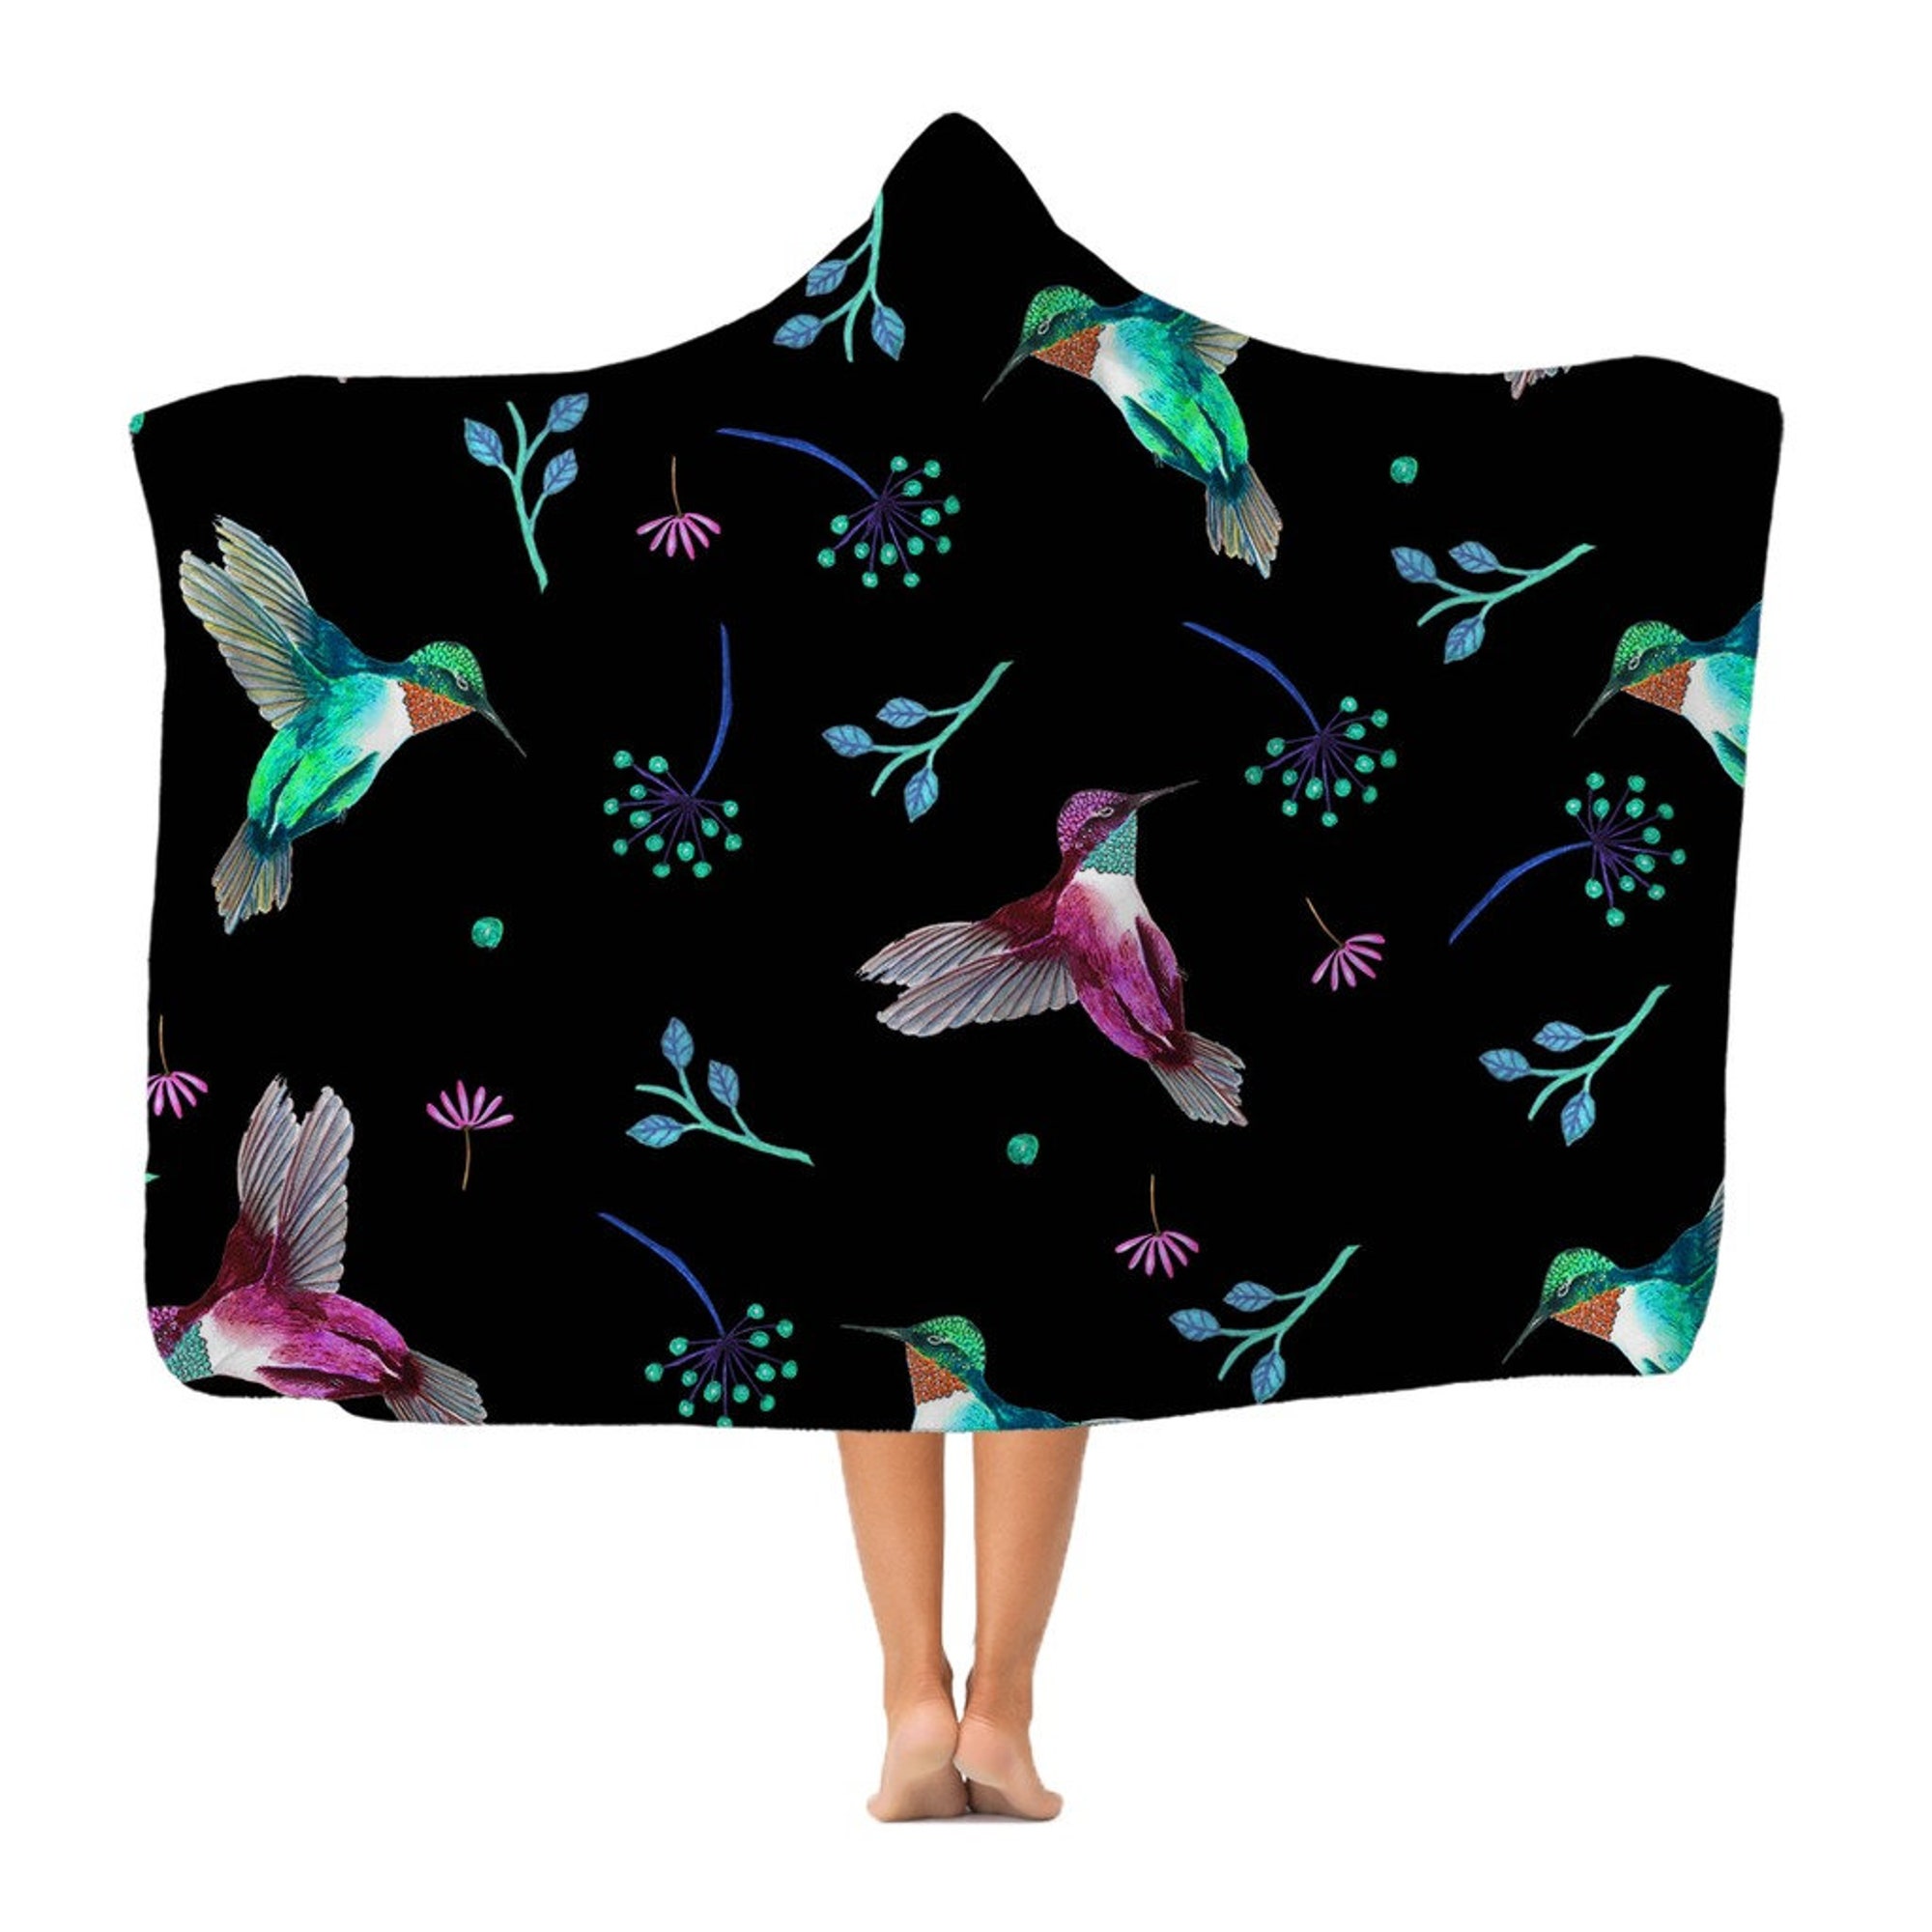 Discover Hummingbird hooded blanket